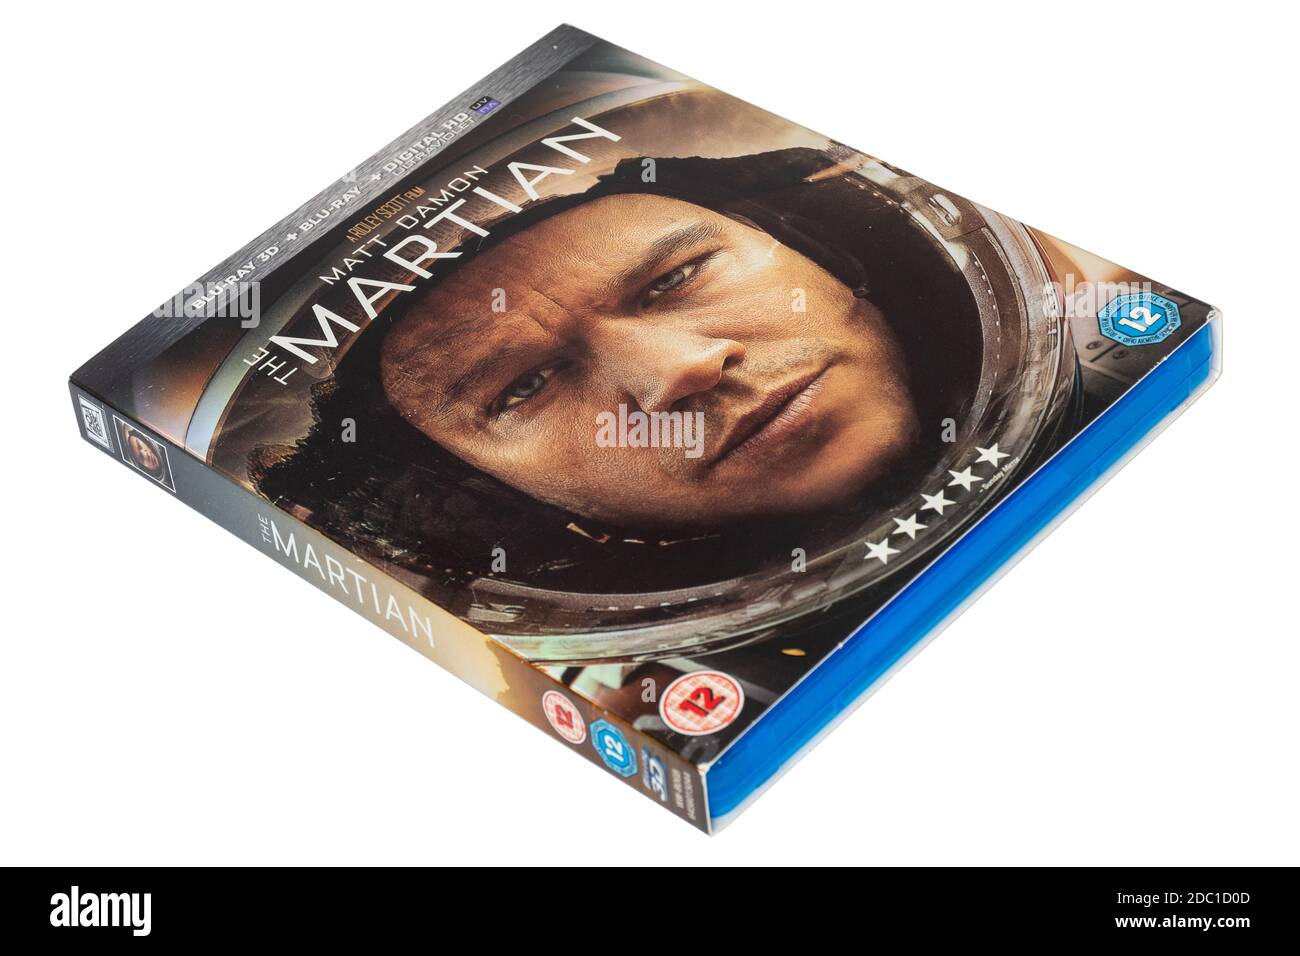 Le disque Blu-ray Martian (DVD) Banque D'Images